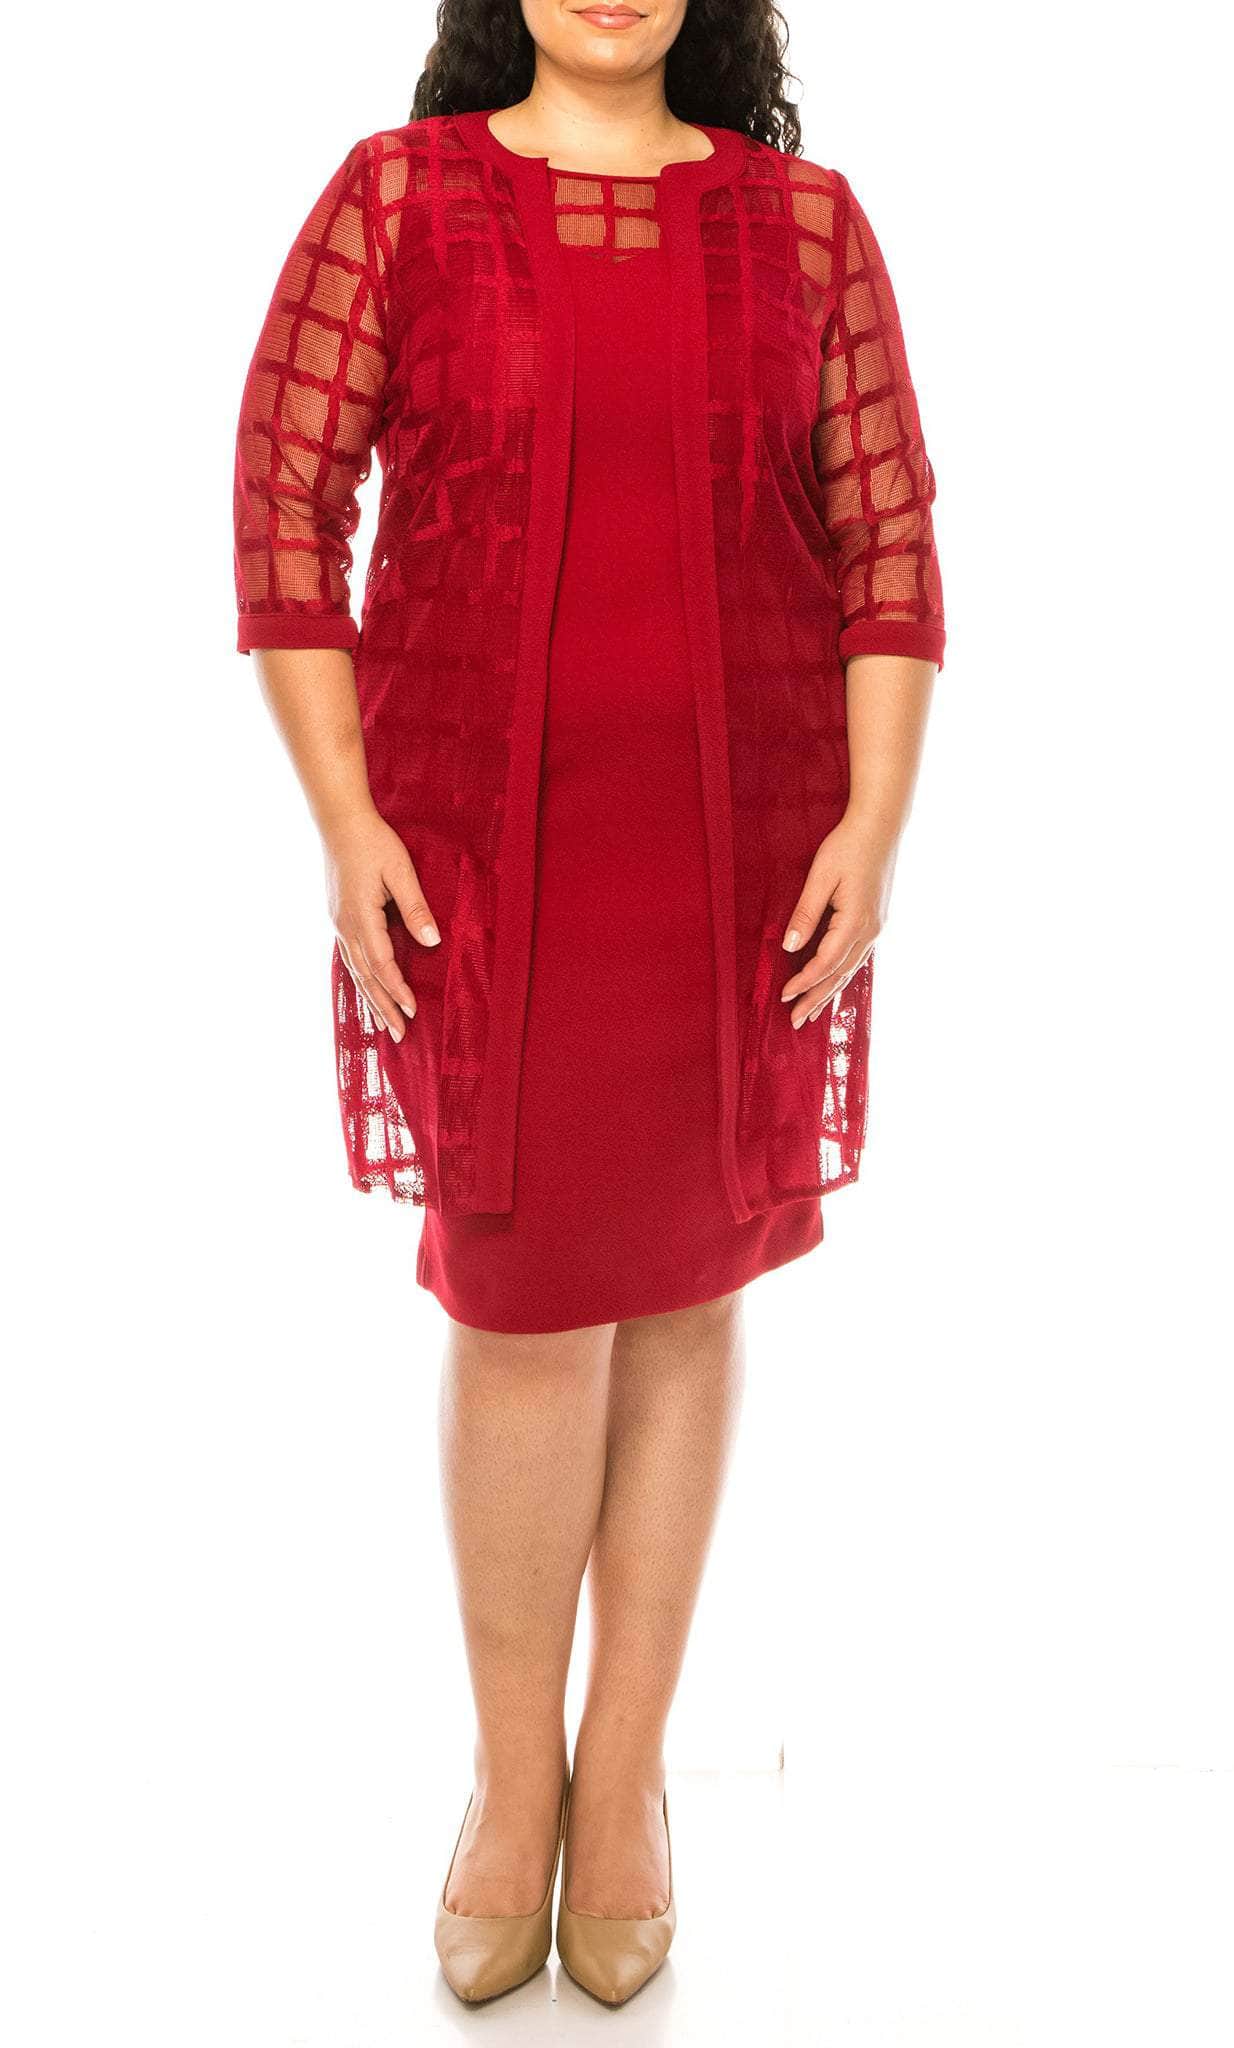 Maya Brooke 26367 - Jewel Neck Lace Jacket Formal Dress Special Occasion Dress 0 / Dark Red